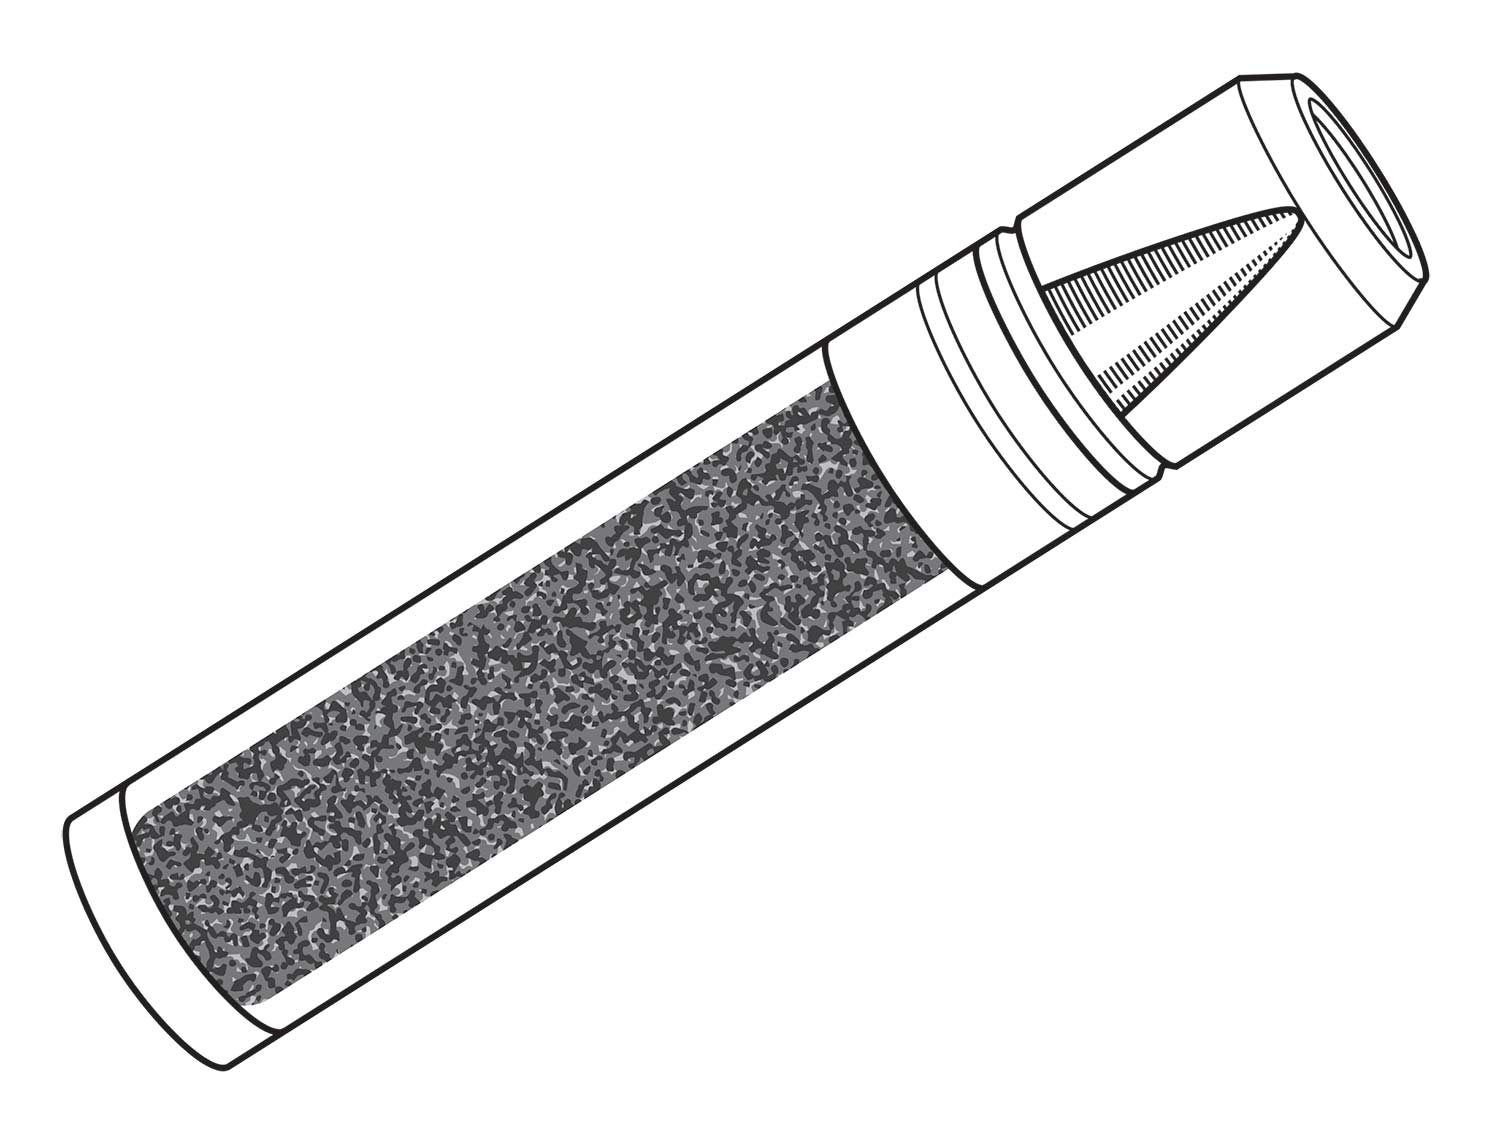 A sketch of the case-telescoped cartridge.